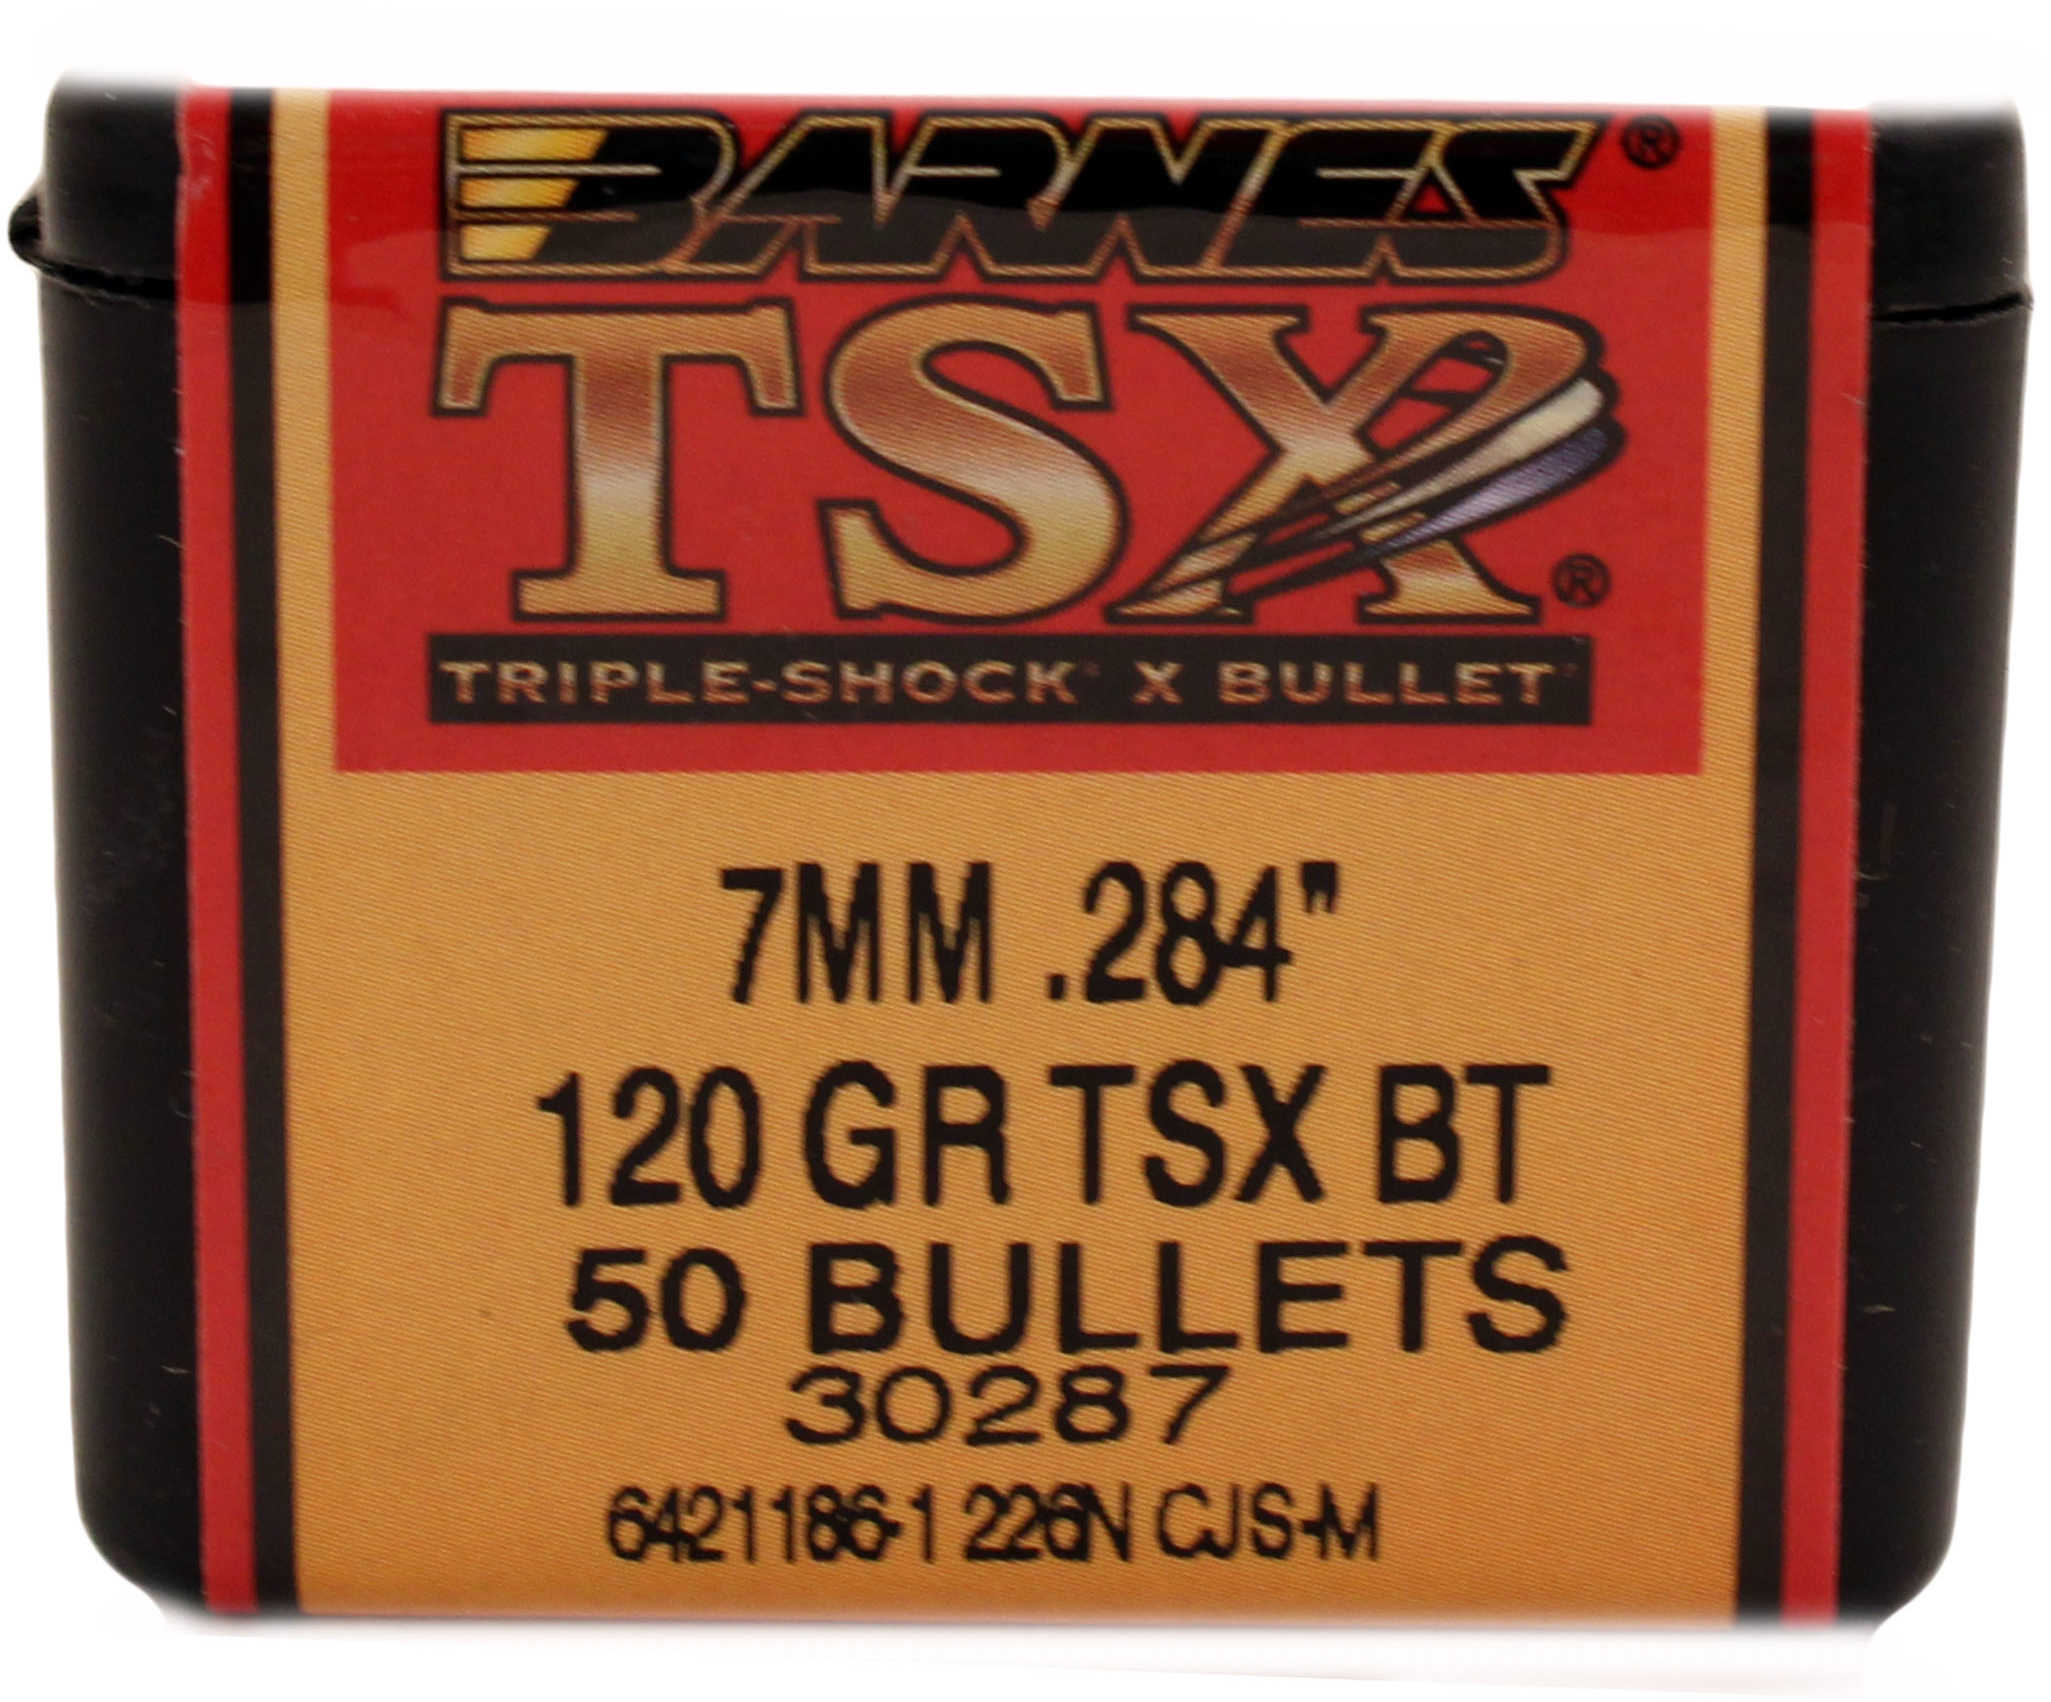 Barnes All Copper Triple-Shock X Bullet 7MM Caliber 120 Grain Boattail 50/Box Md: 28442